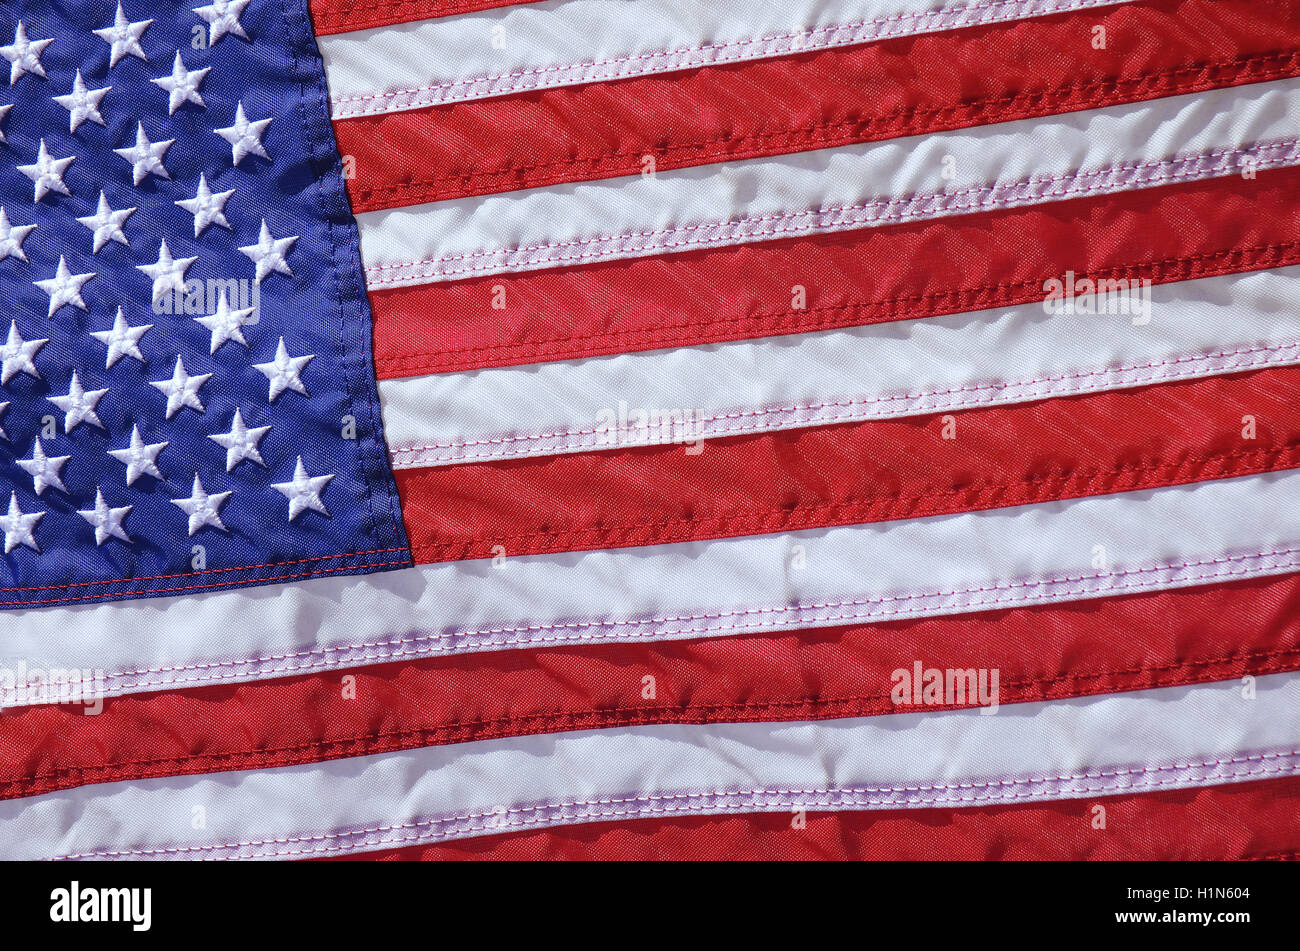 Background image of the United States of America flag Stock Photo